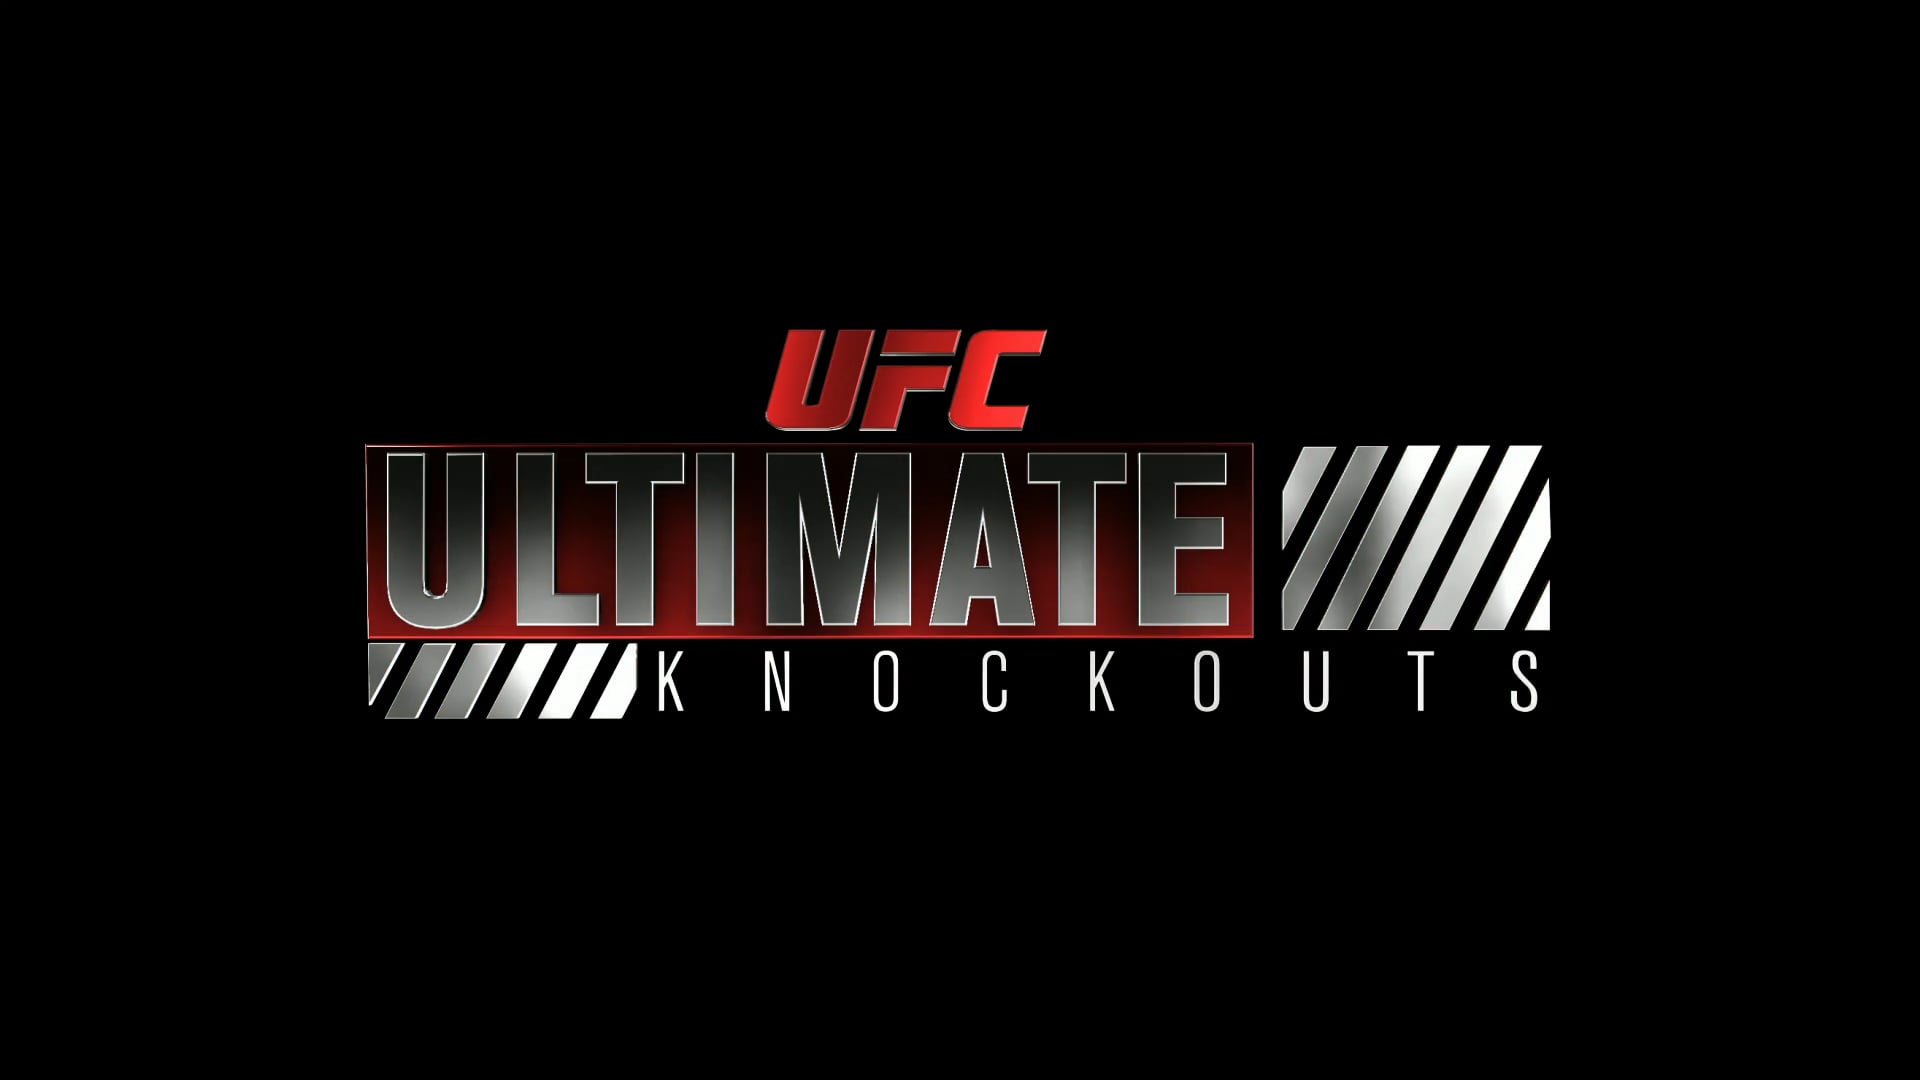 UFC Ultimate Knockouts - Production ReBrand